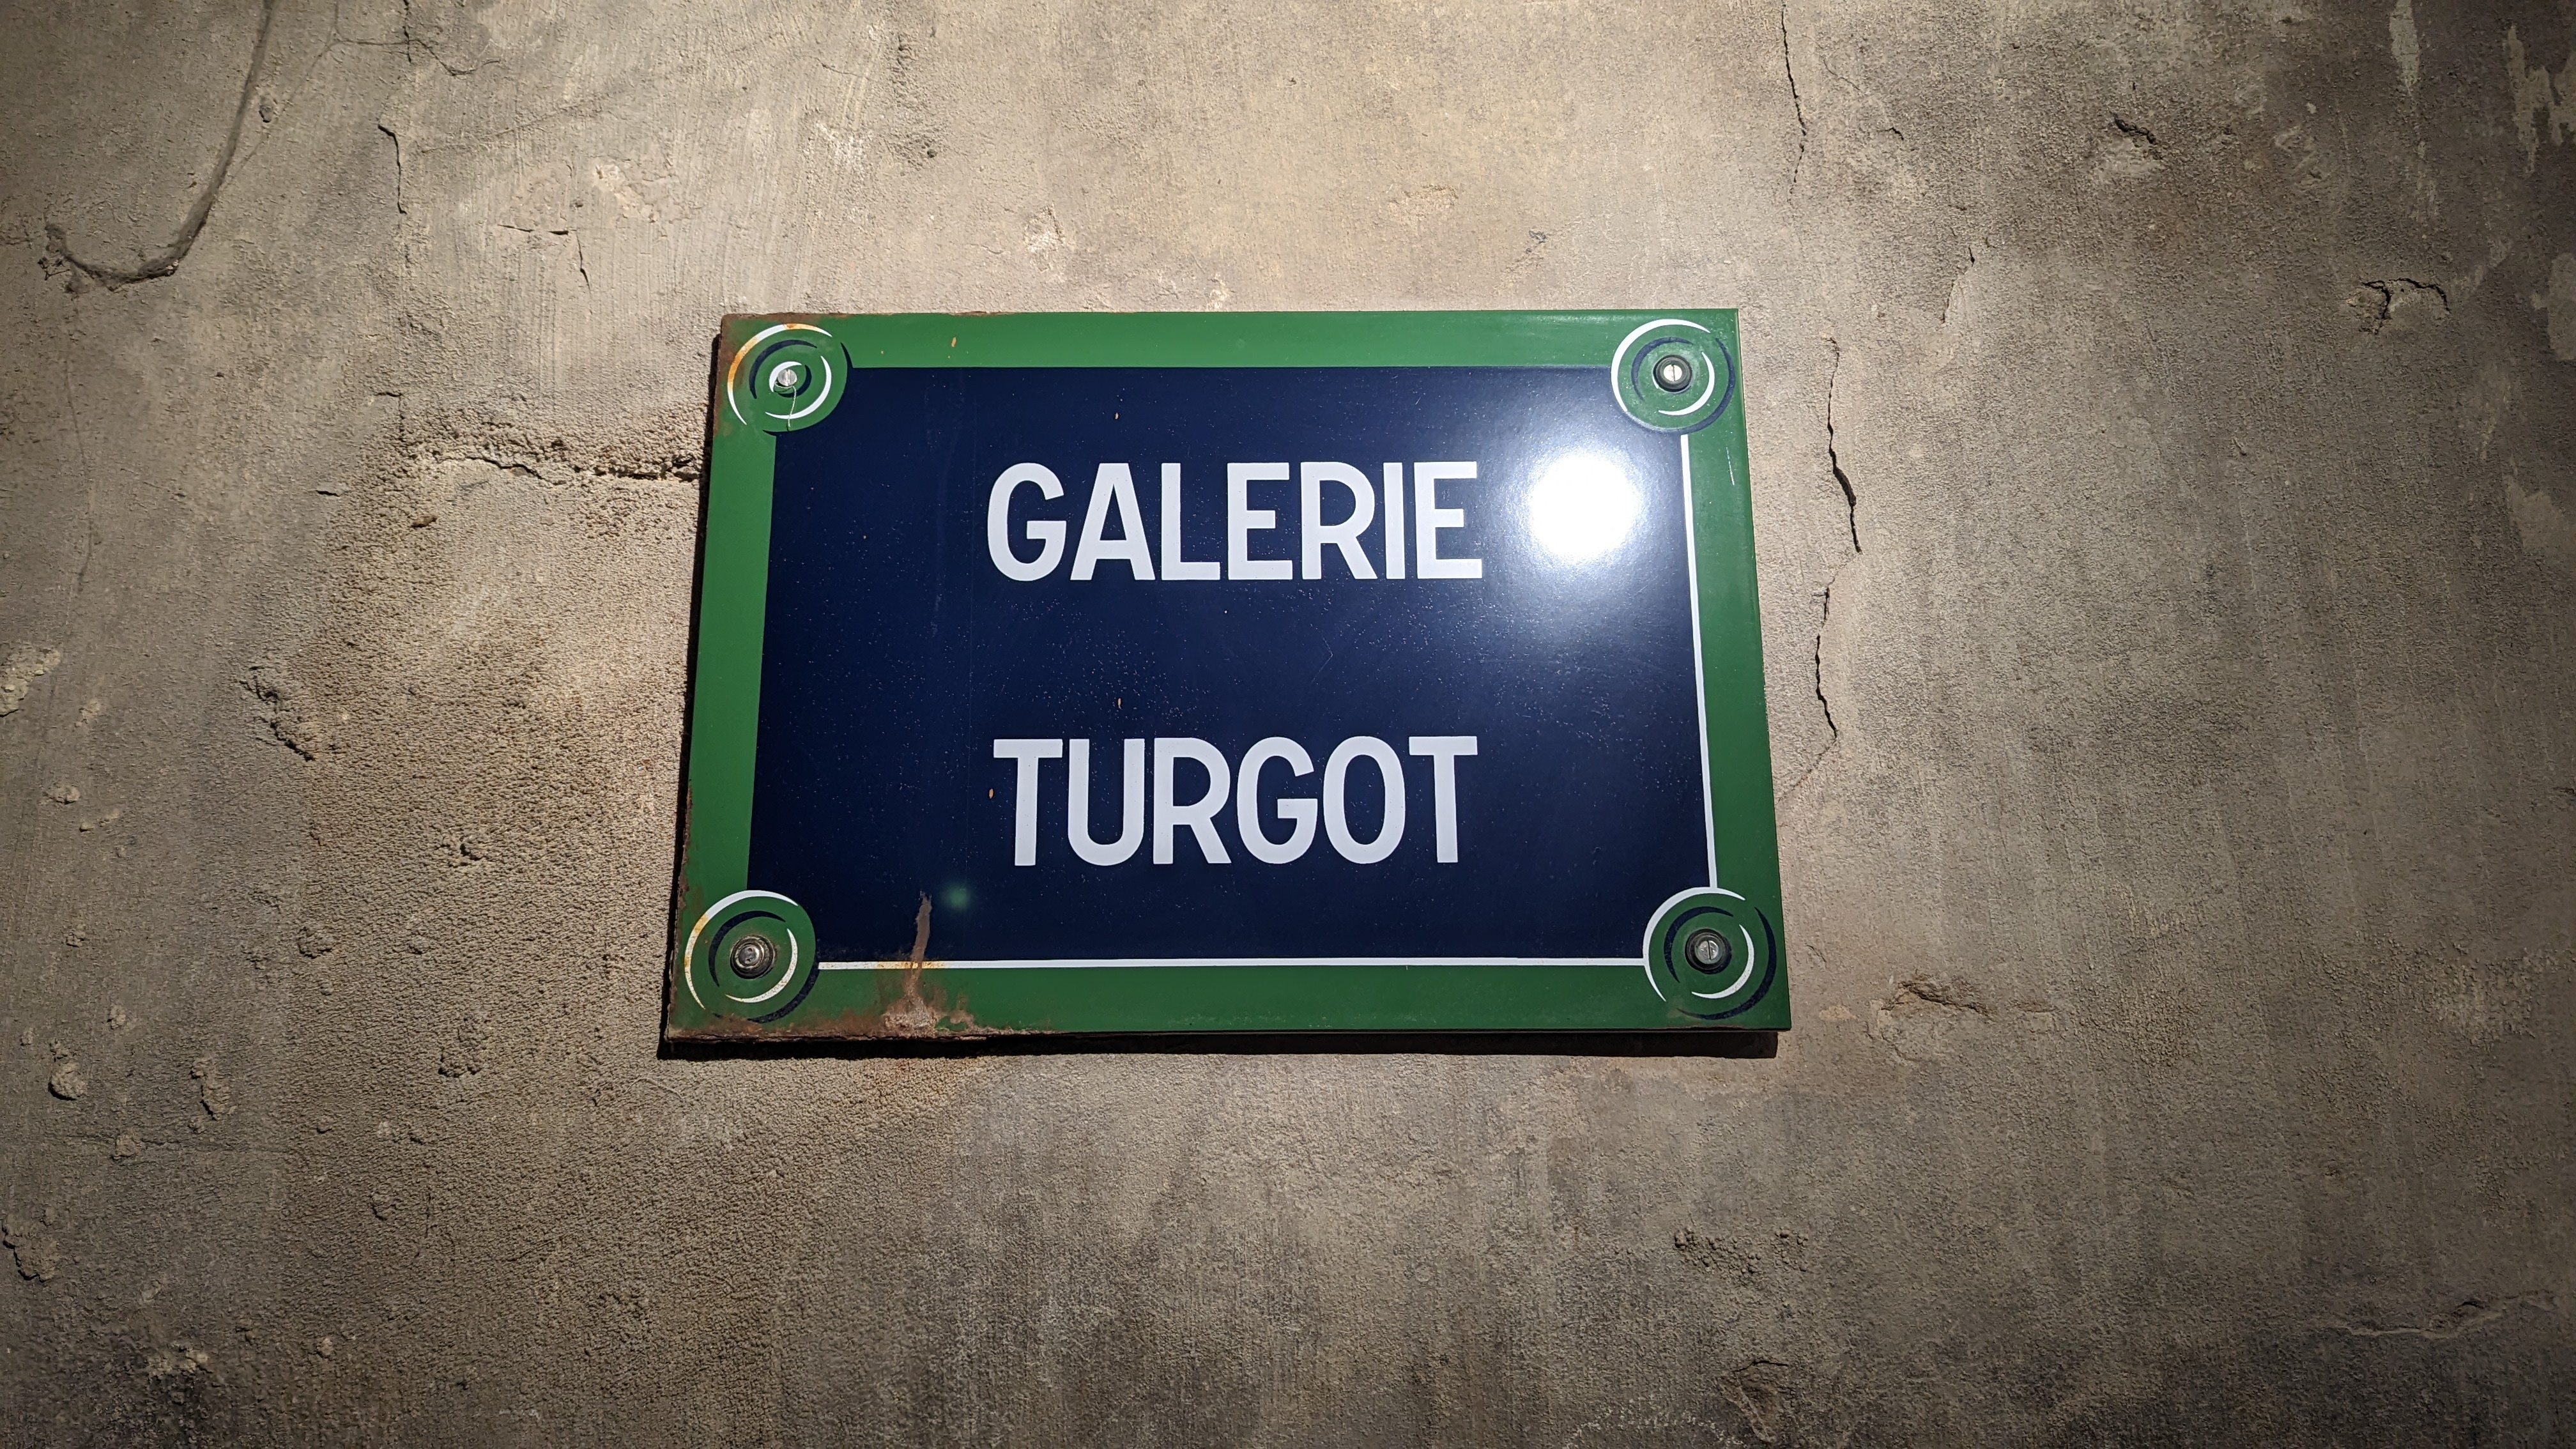 A street sign reading "Galerie Turgot".